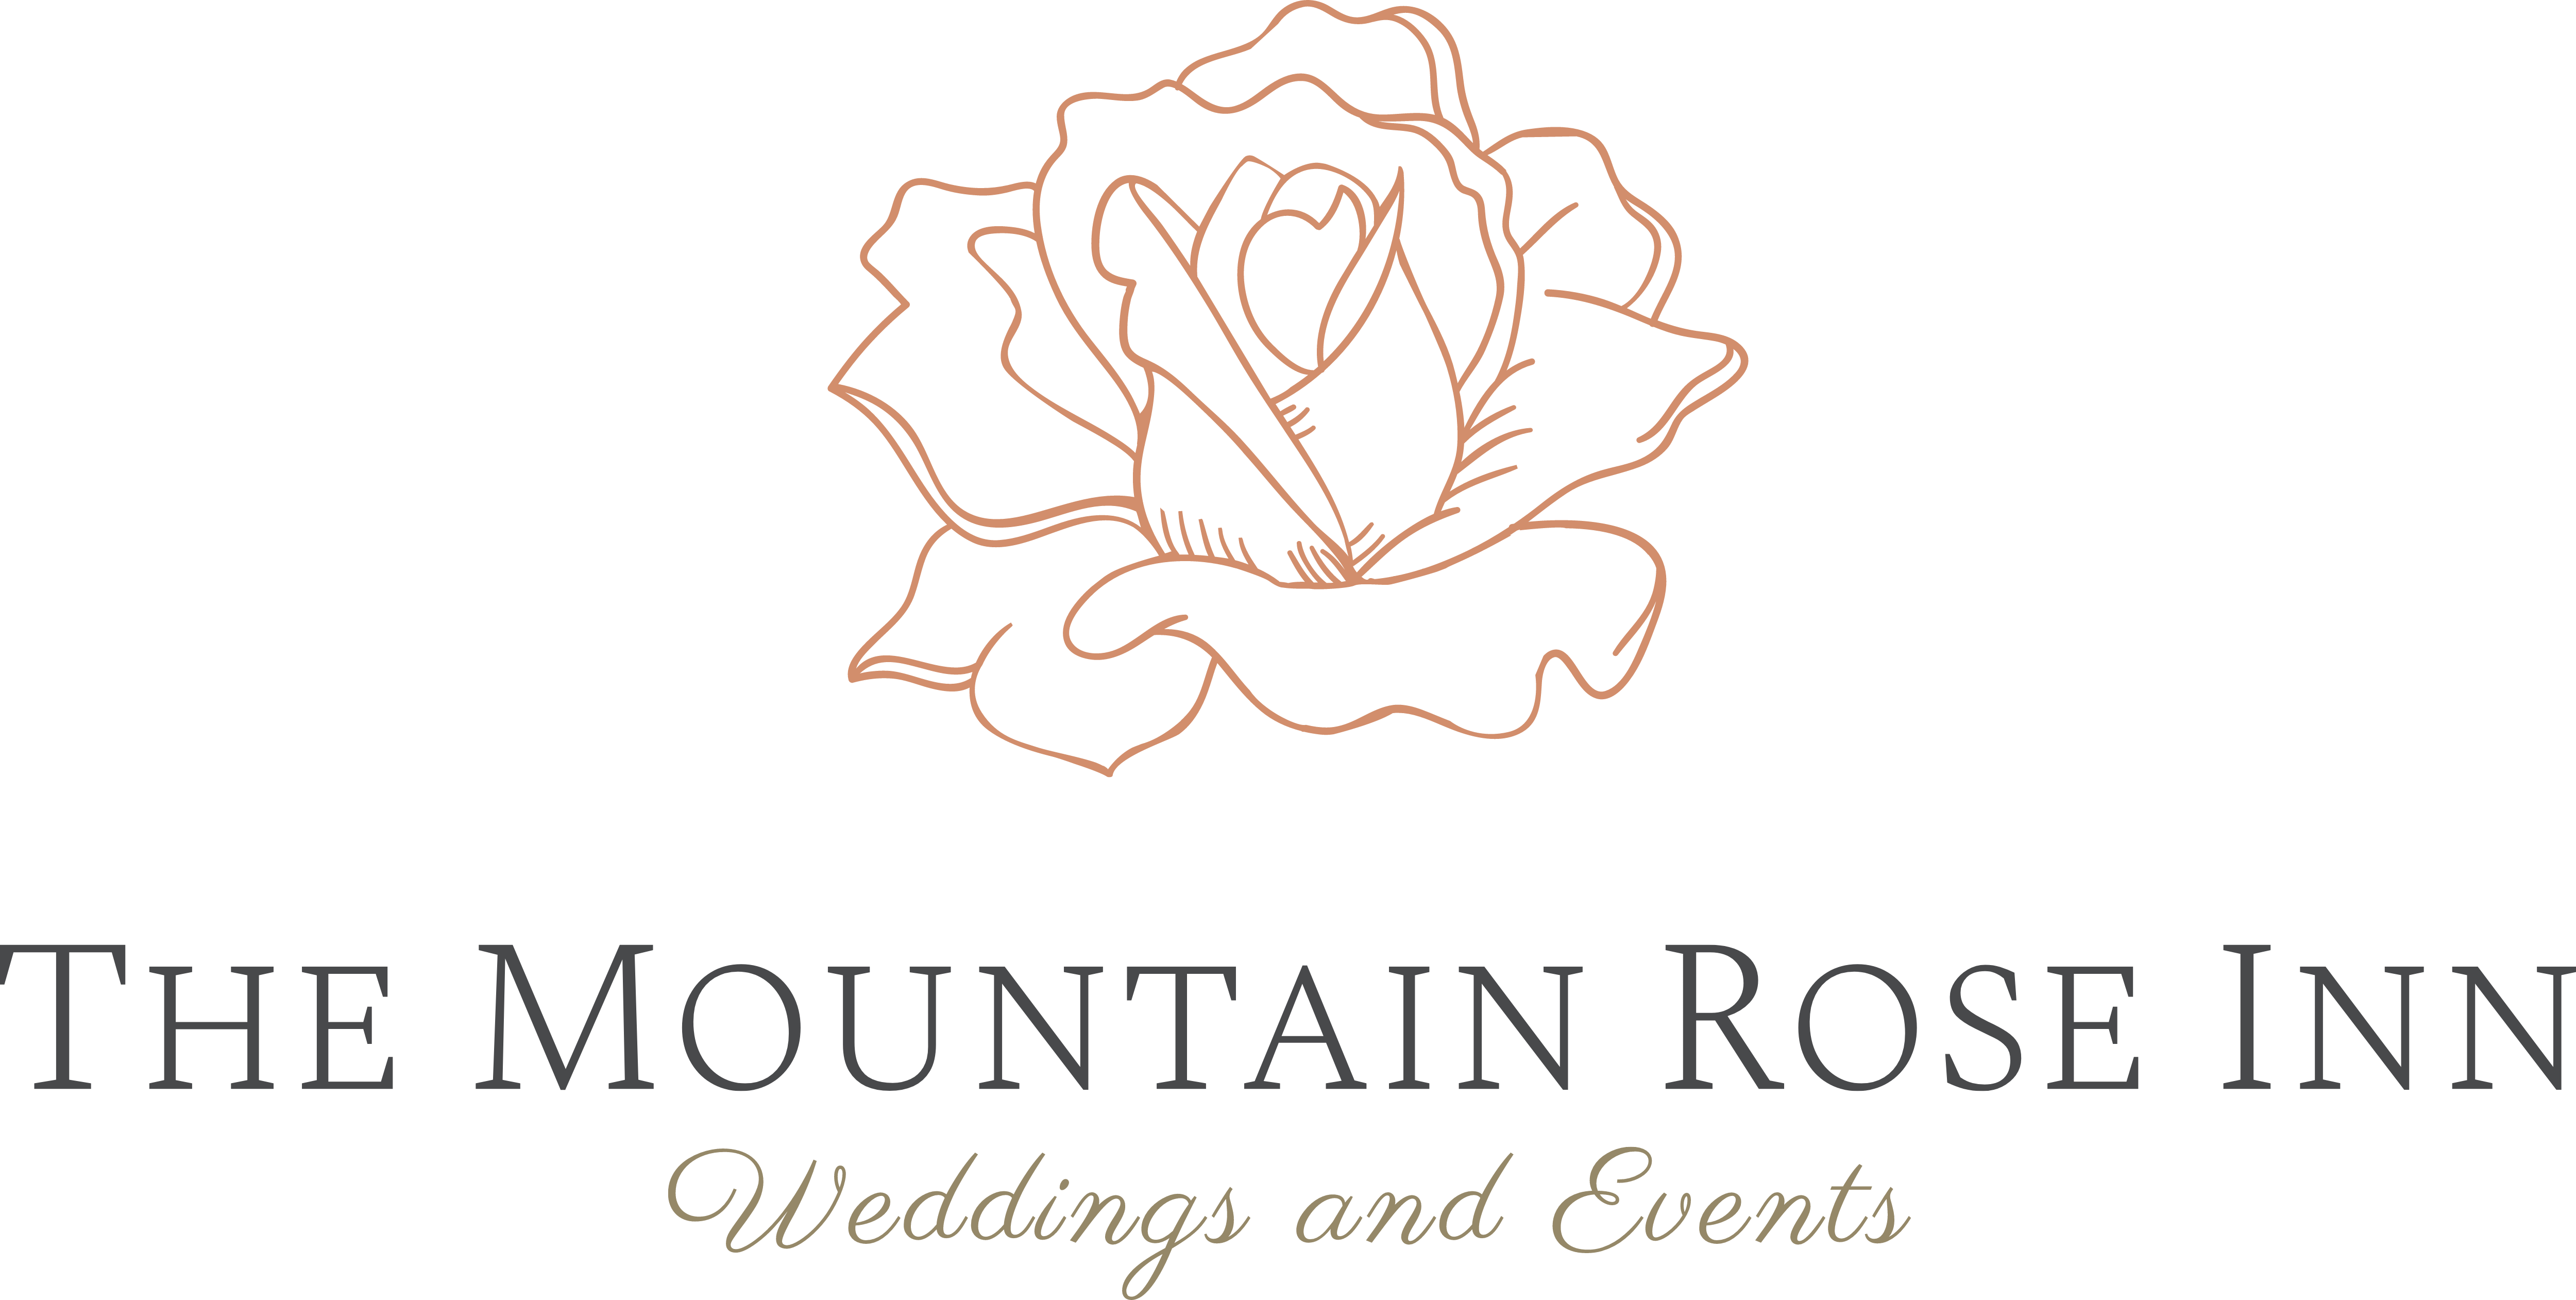 The Mountain Rose Inn